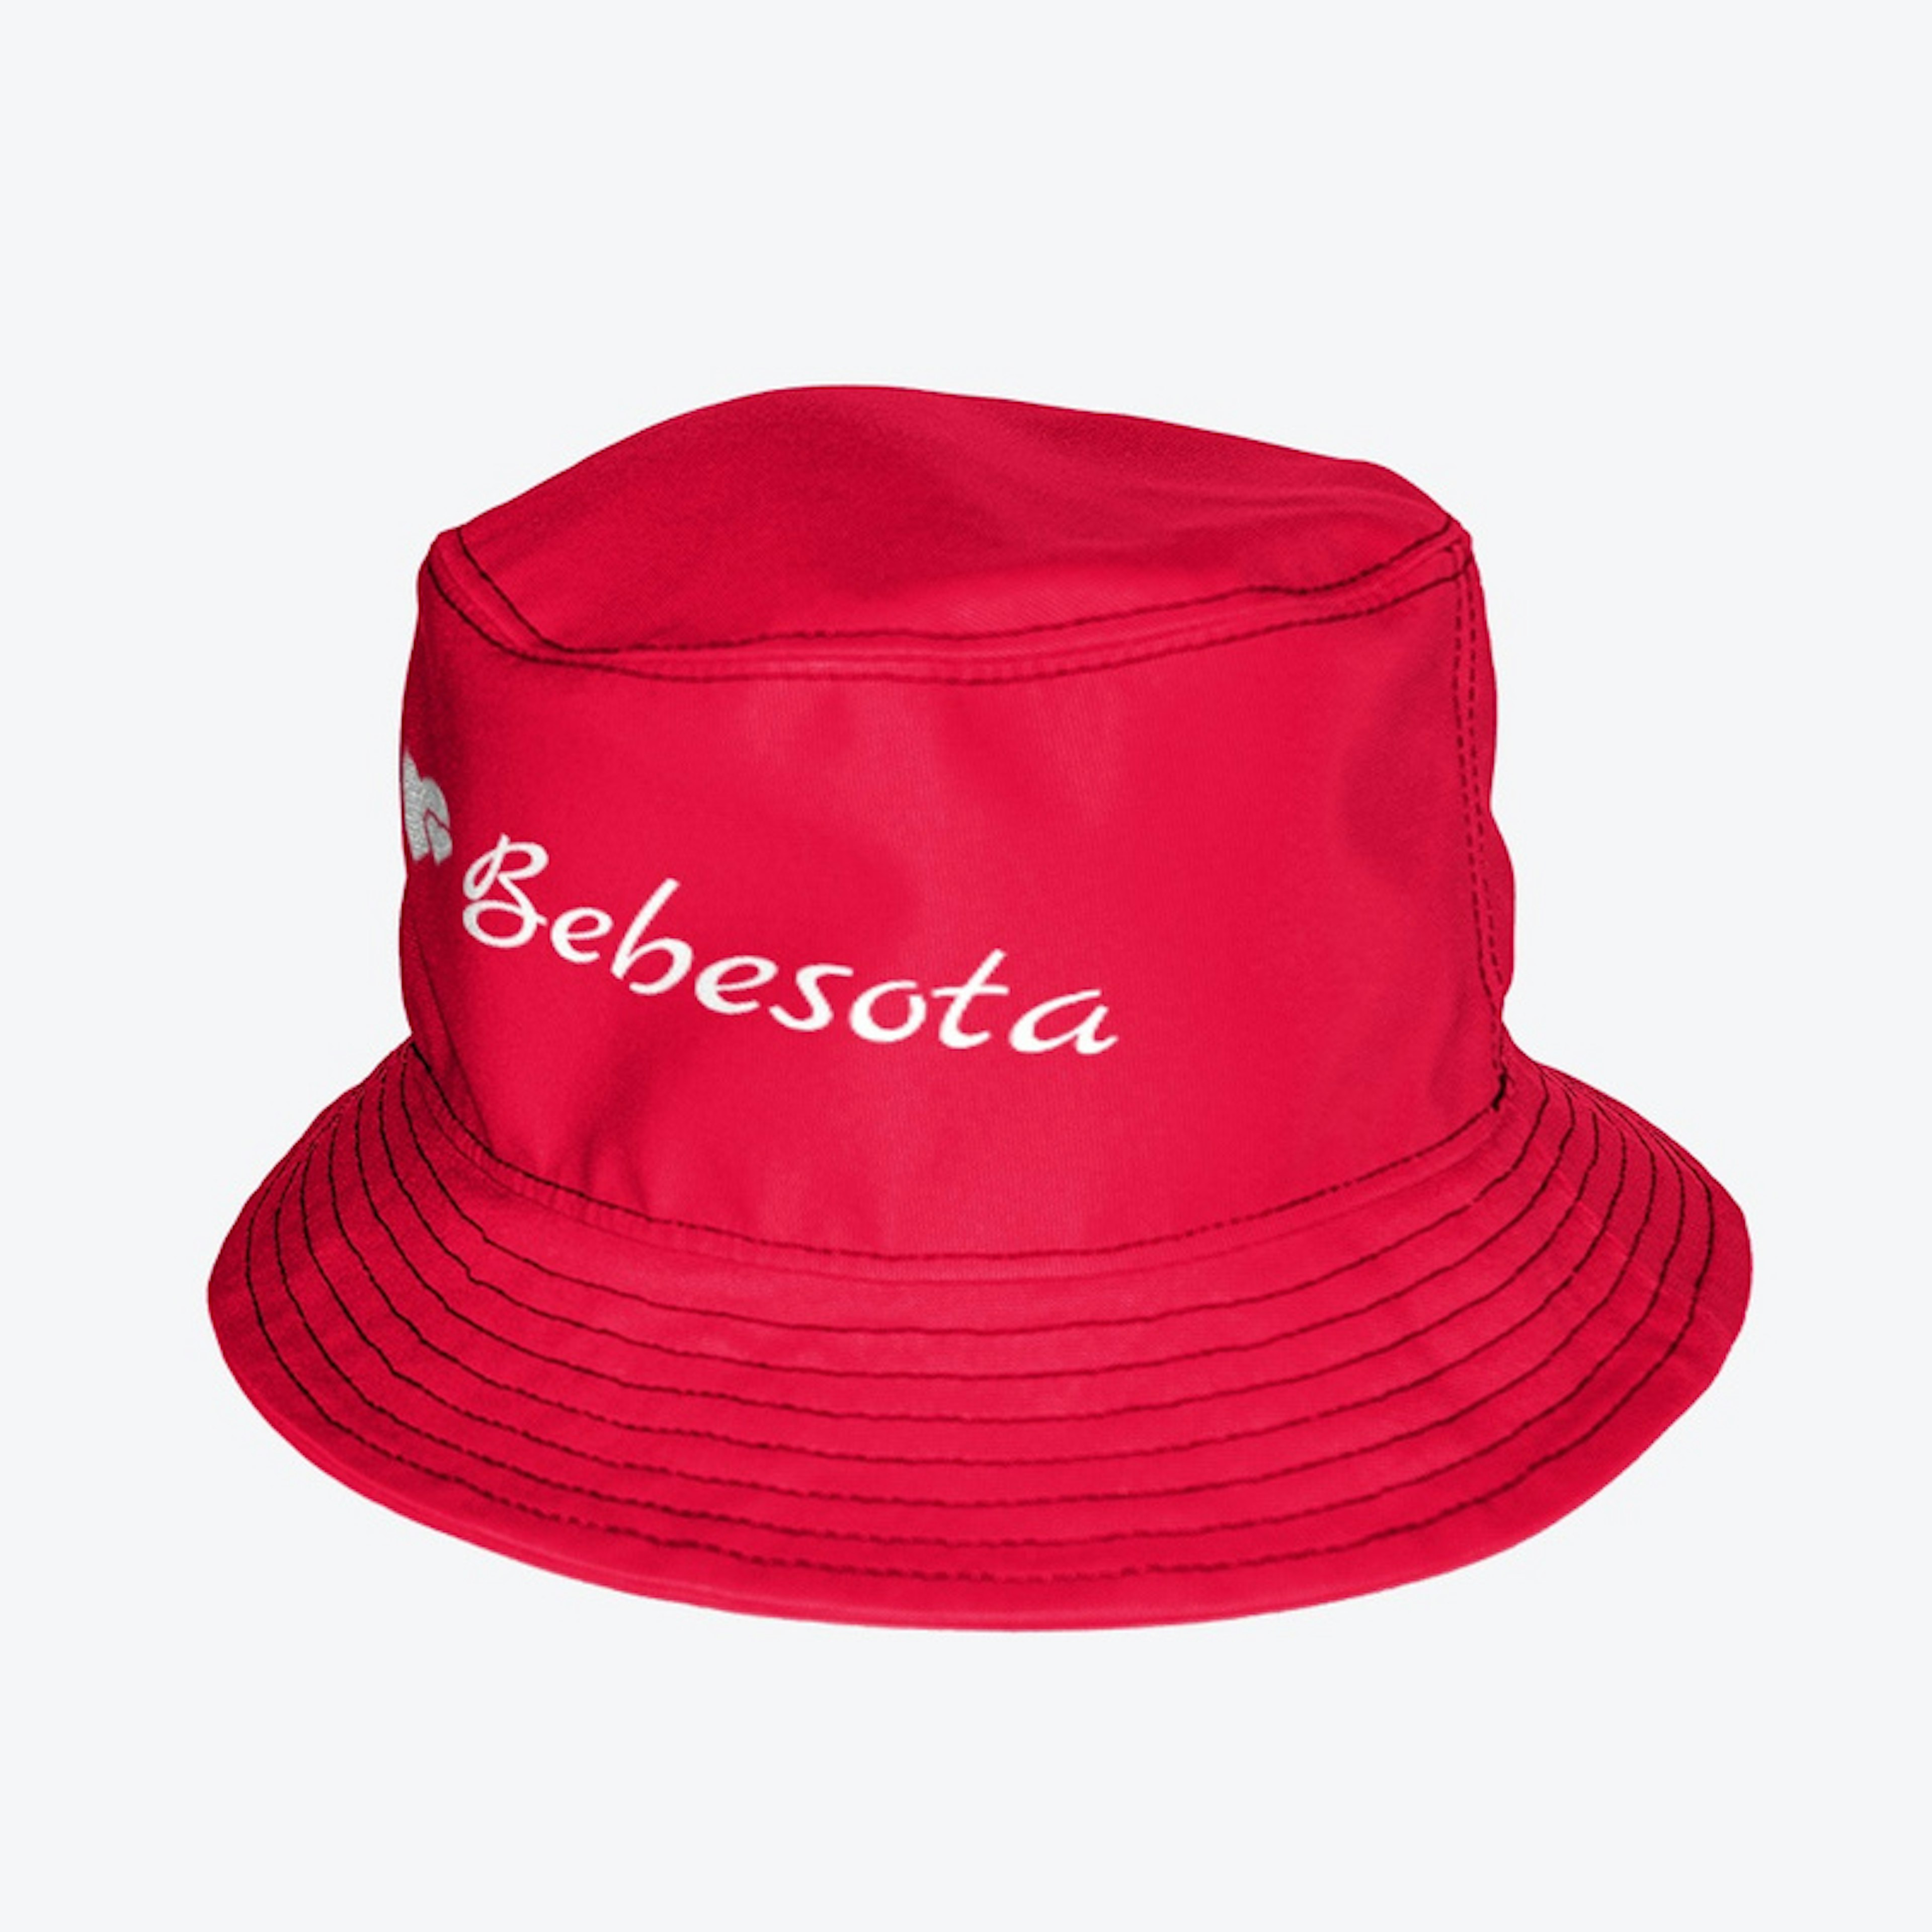 Miss Bebesota Bucket Hat - Color